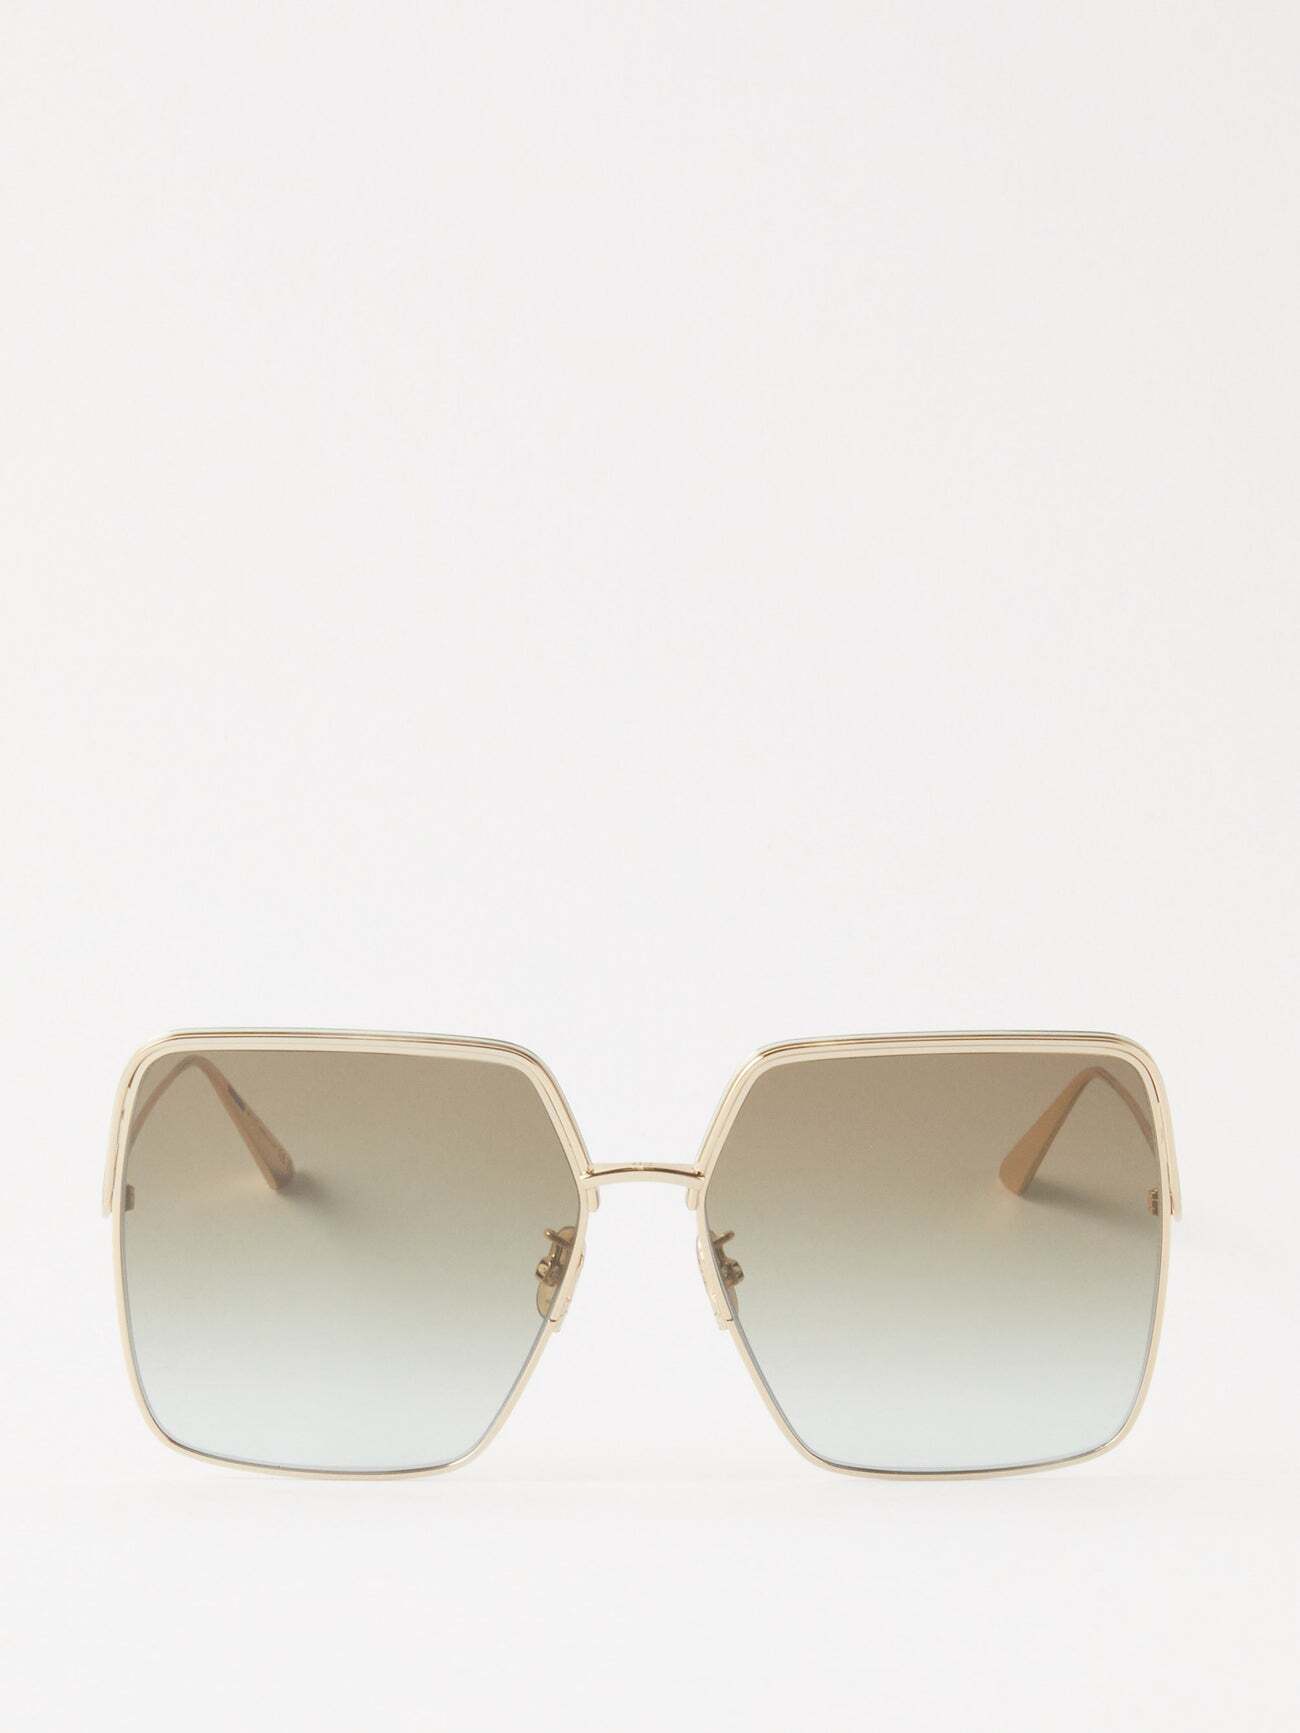 Dior - Everdior S1u Oversized Square Metal Sunglasses - Womens - Green Gold